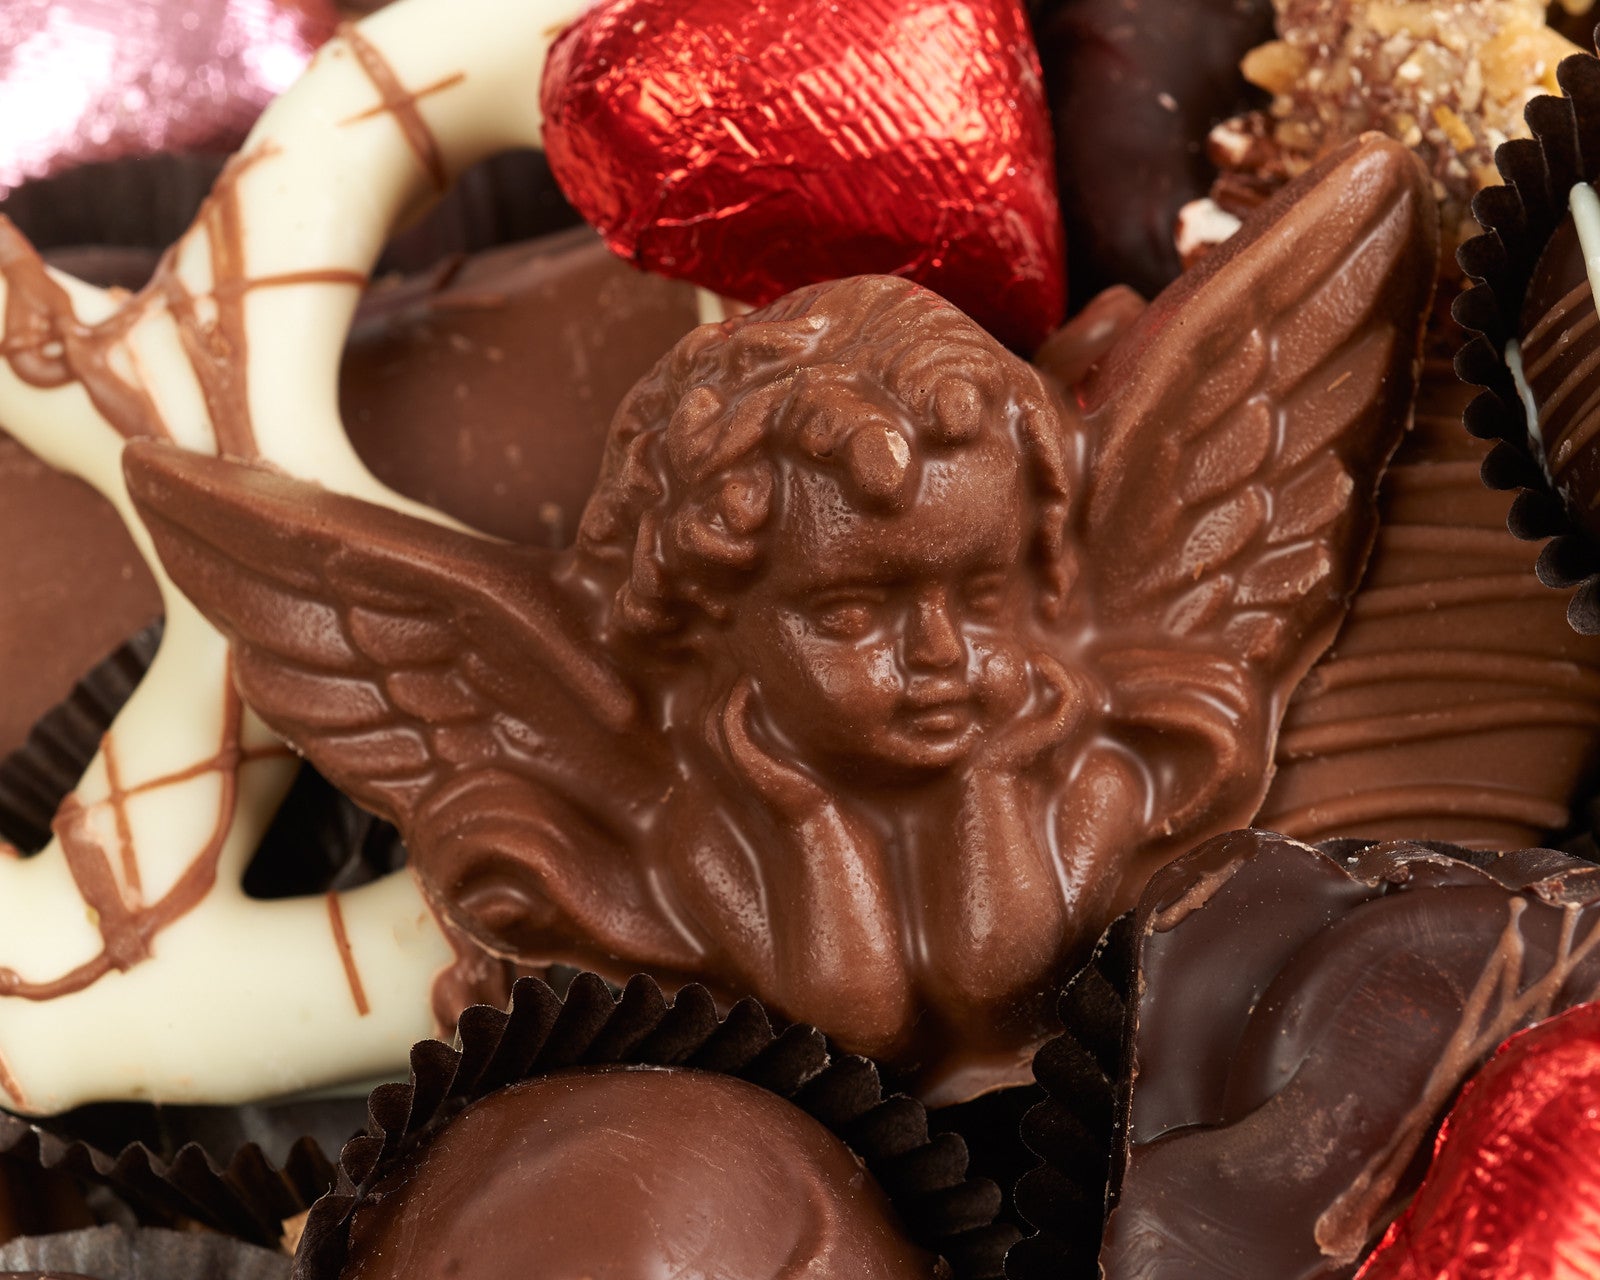 Chocolate Dates - Arabian Gift Box from Chocolate Factory GetMyDates -  GetMyDates